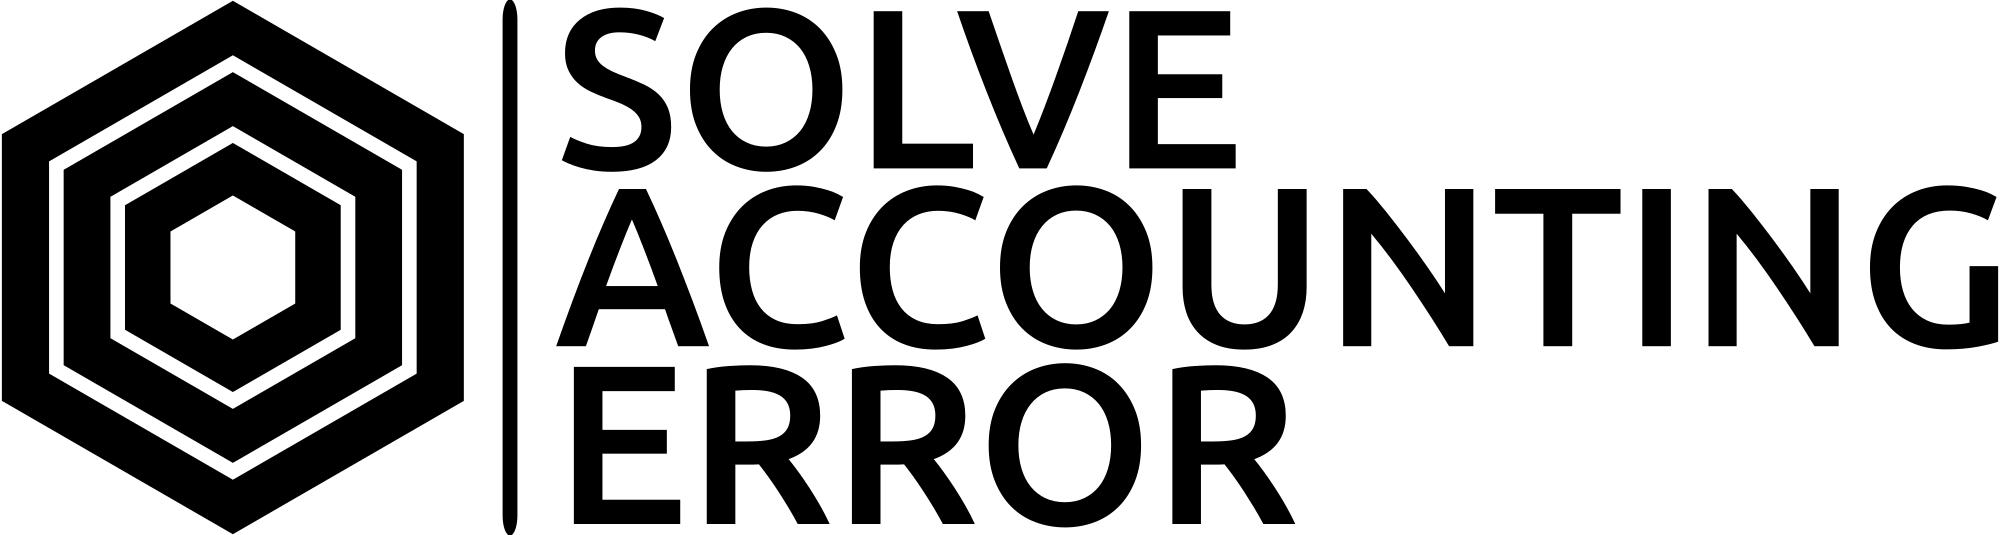 Solve Accounting Error